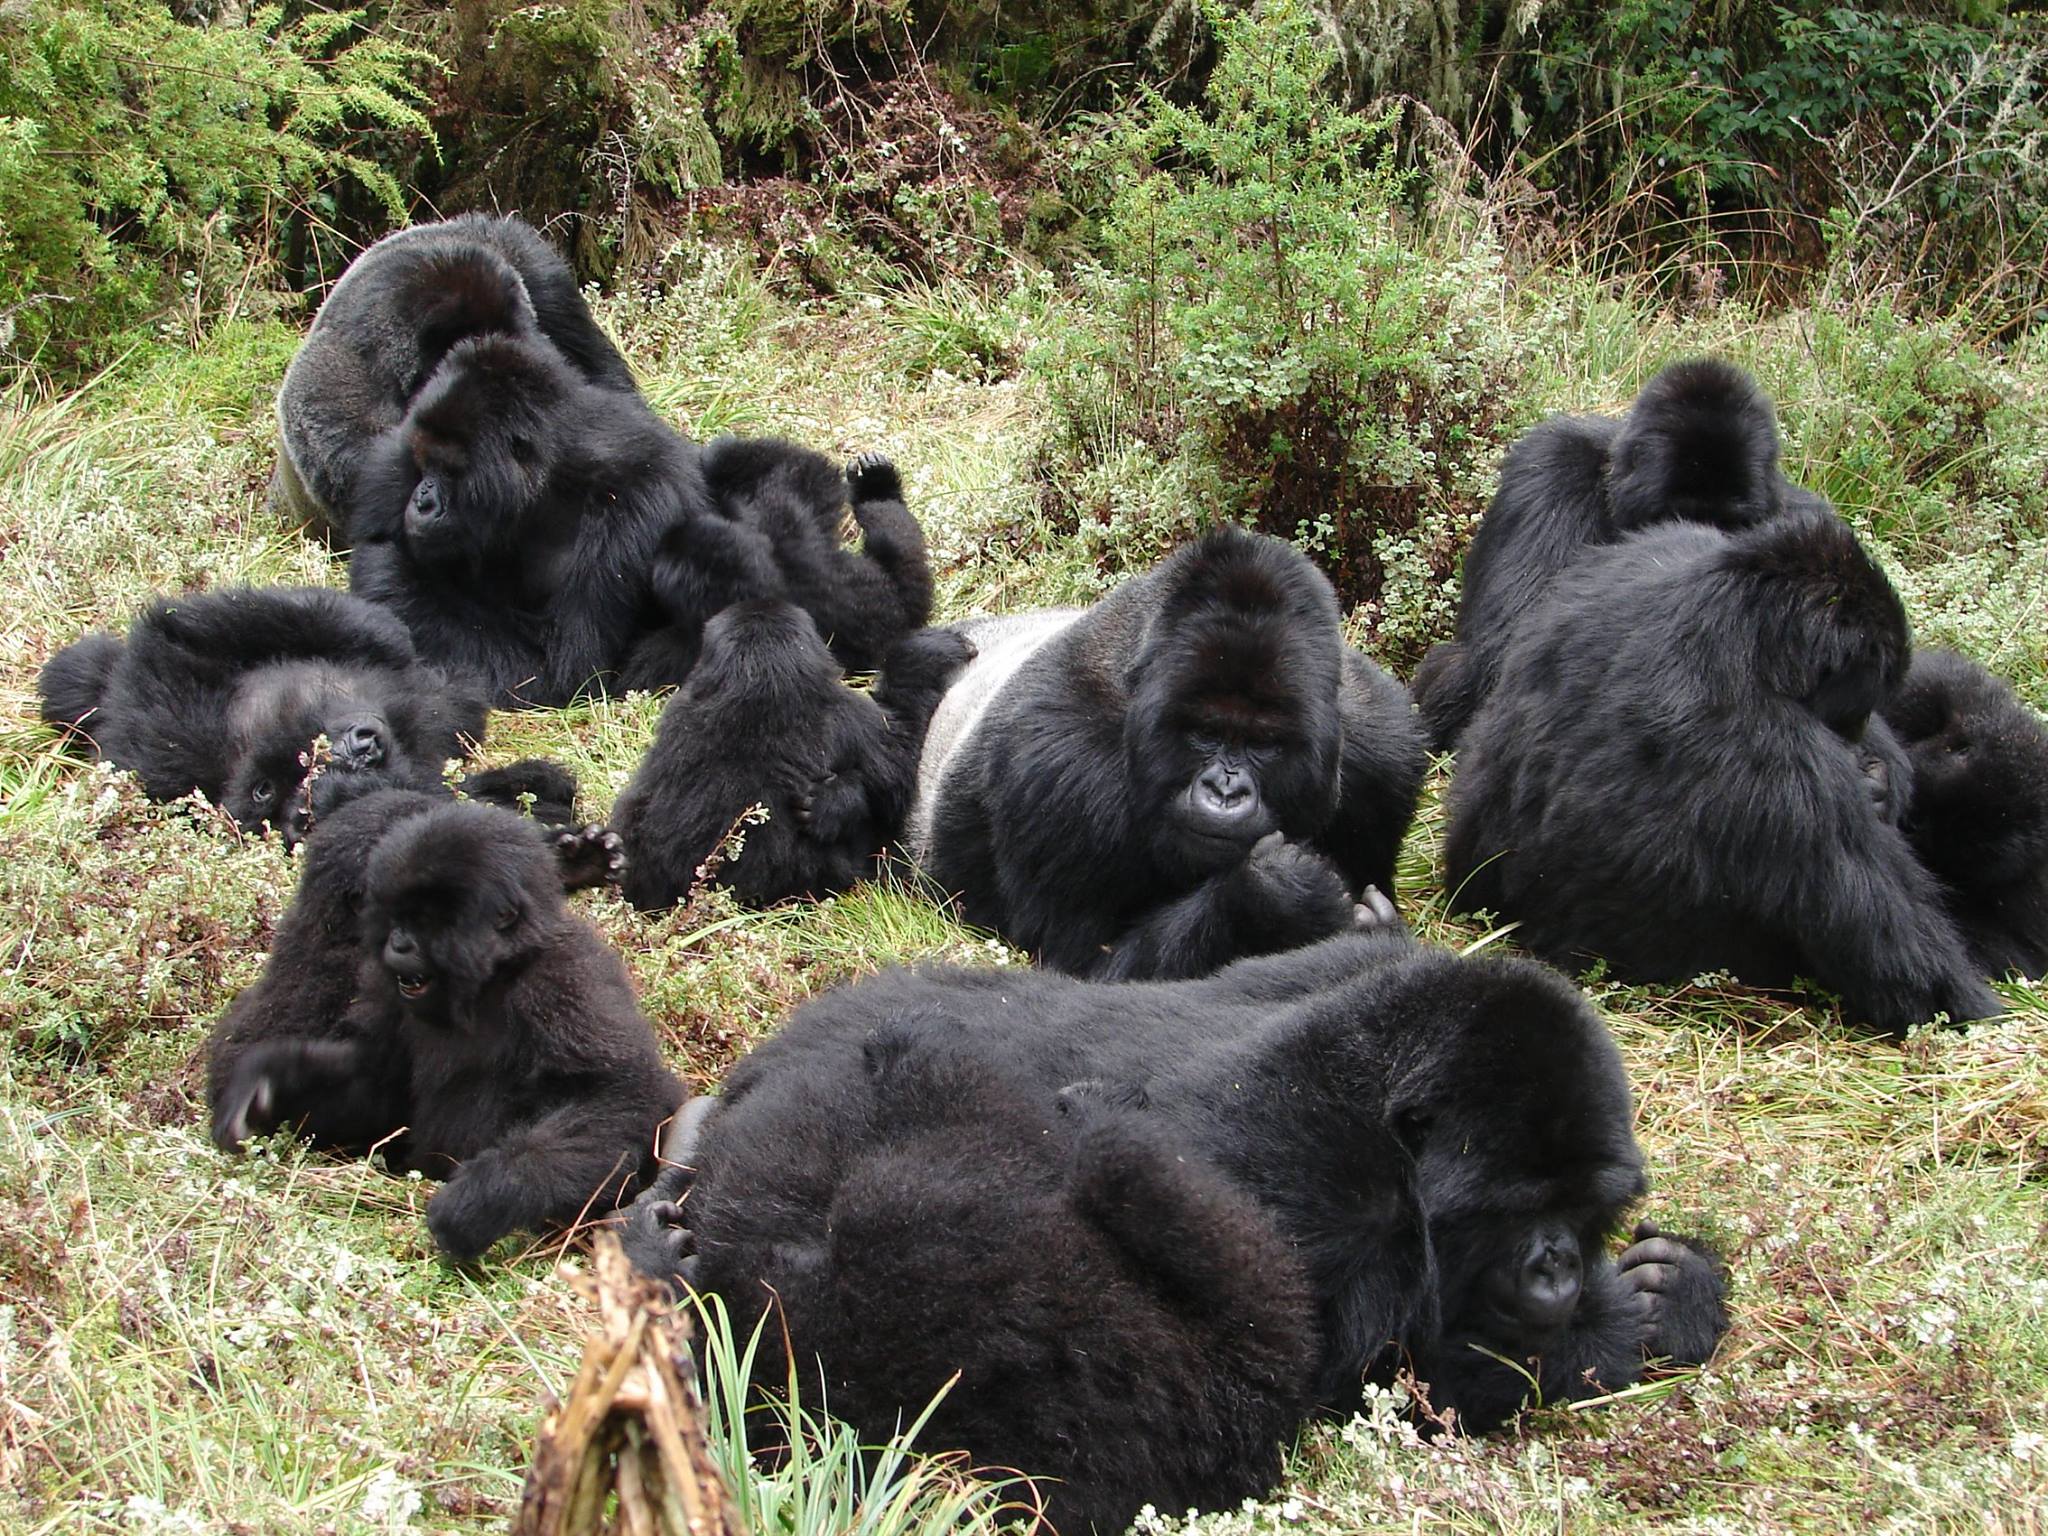 New wildlife film calls for action to protect Rwandan gorilla